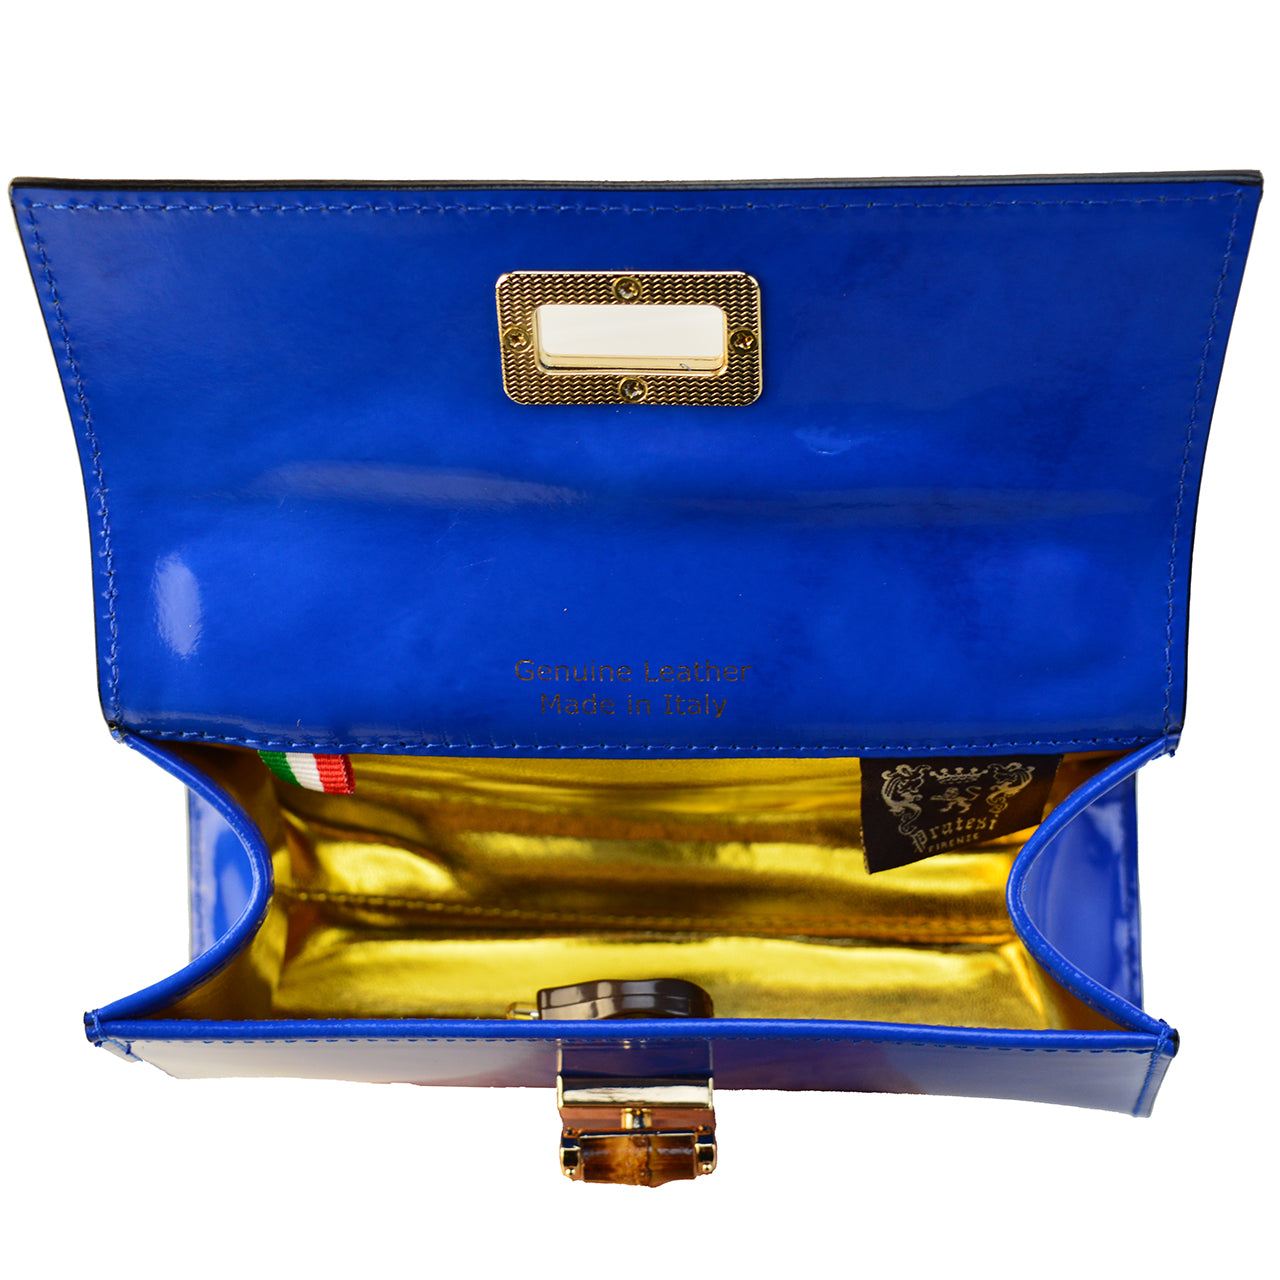 Pratesi Castalia Lady Bag in genuine Italian leather - Castalia Pink